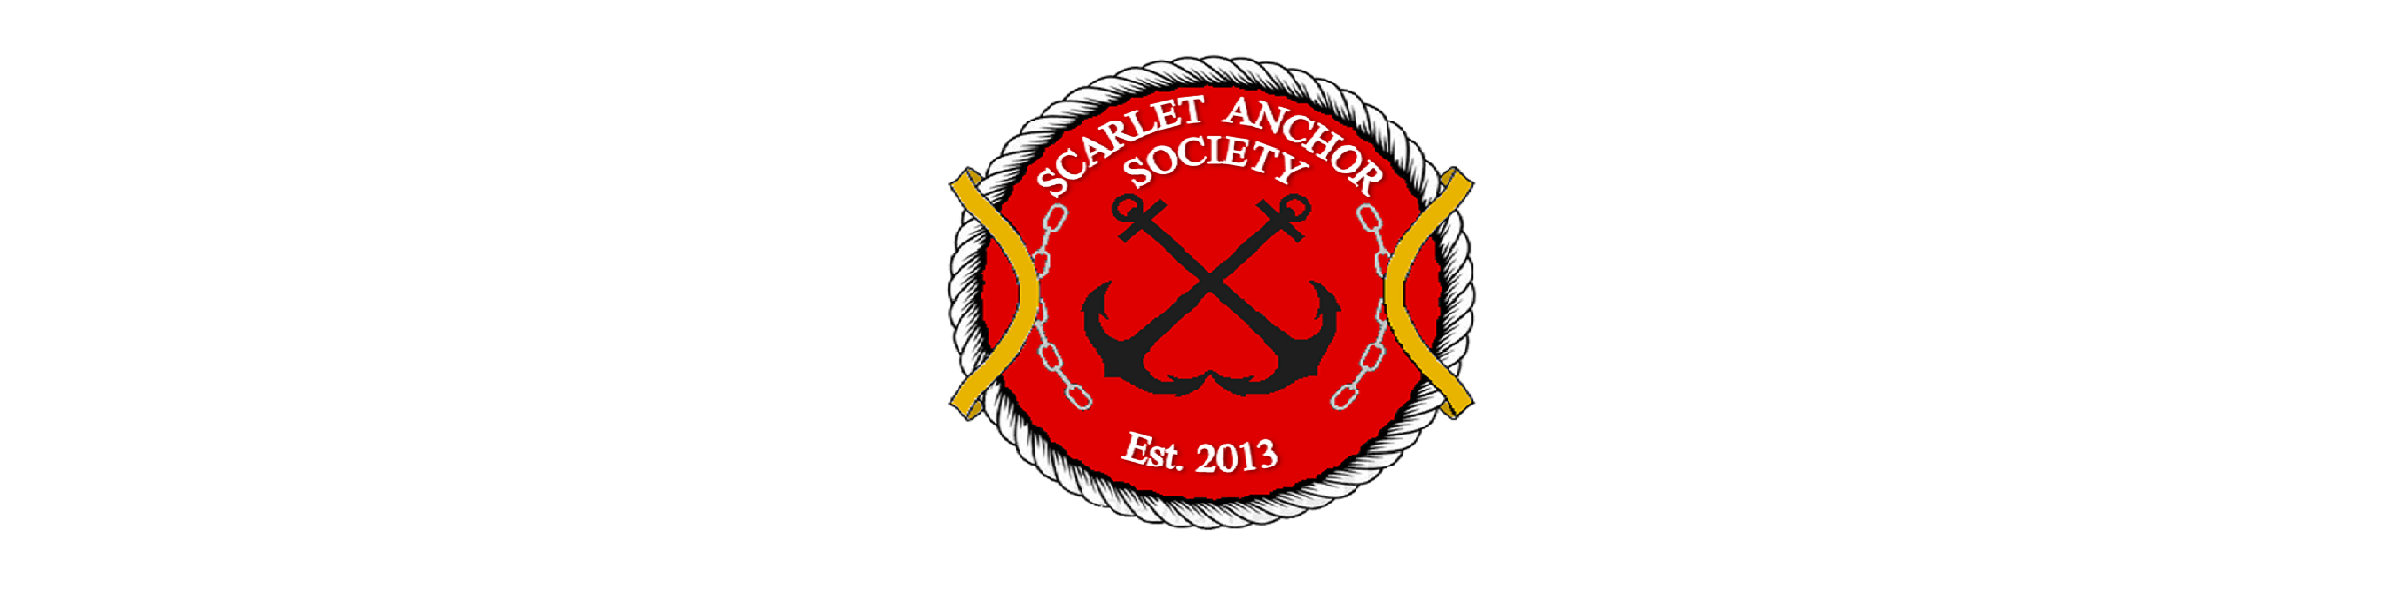 Scarlet Anchor Society Logo